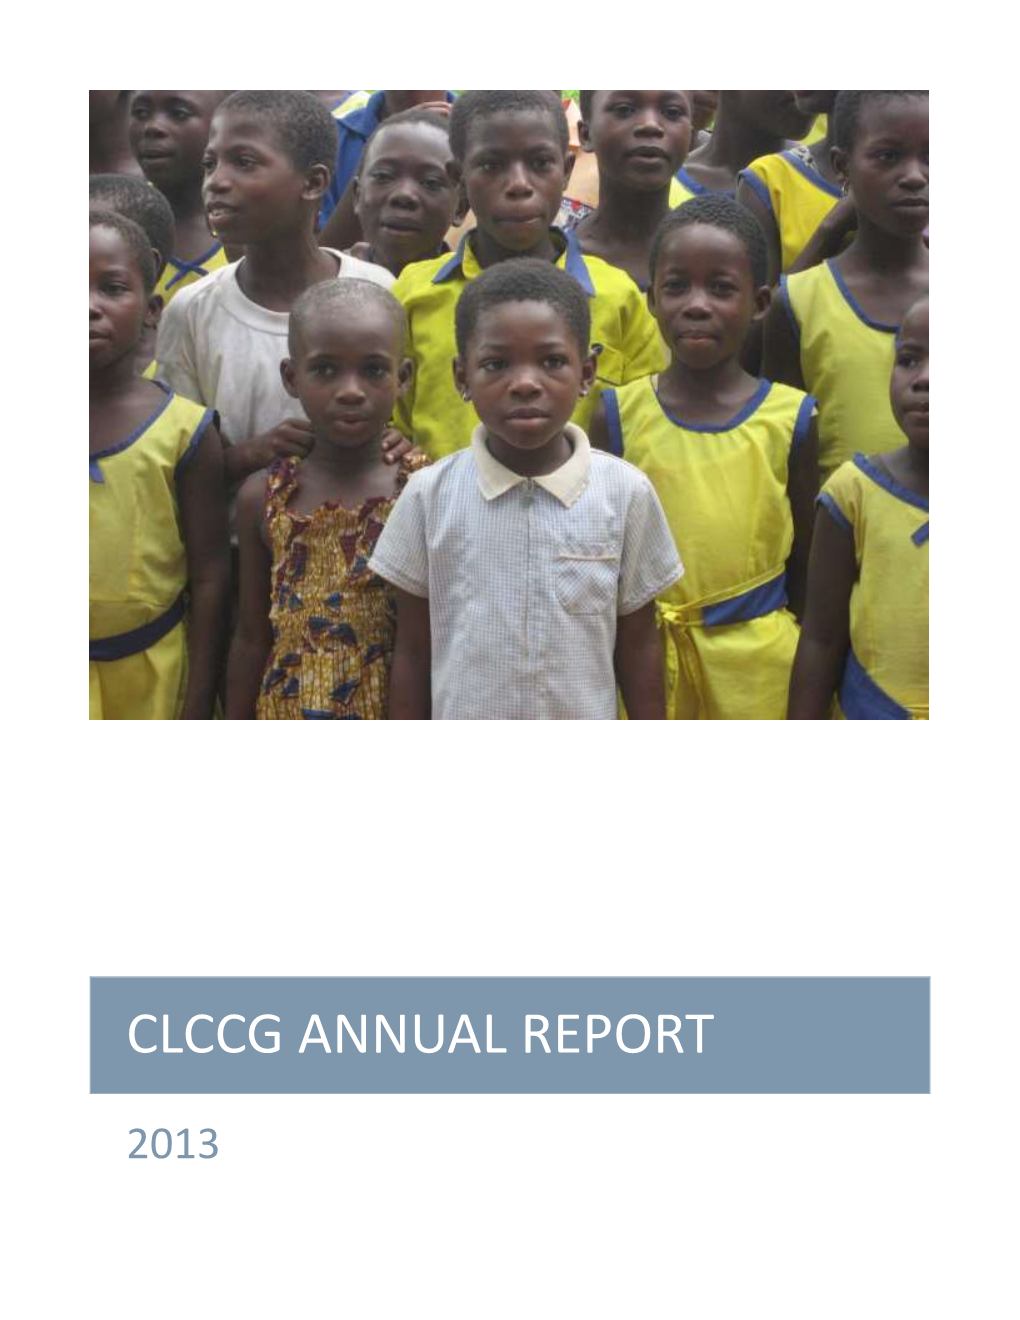 Clccg Annual Report